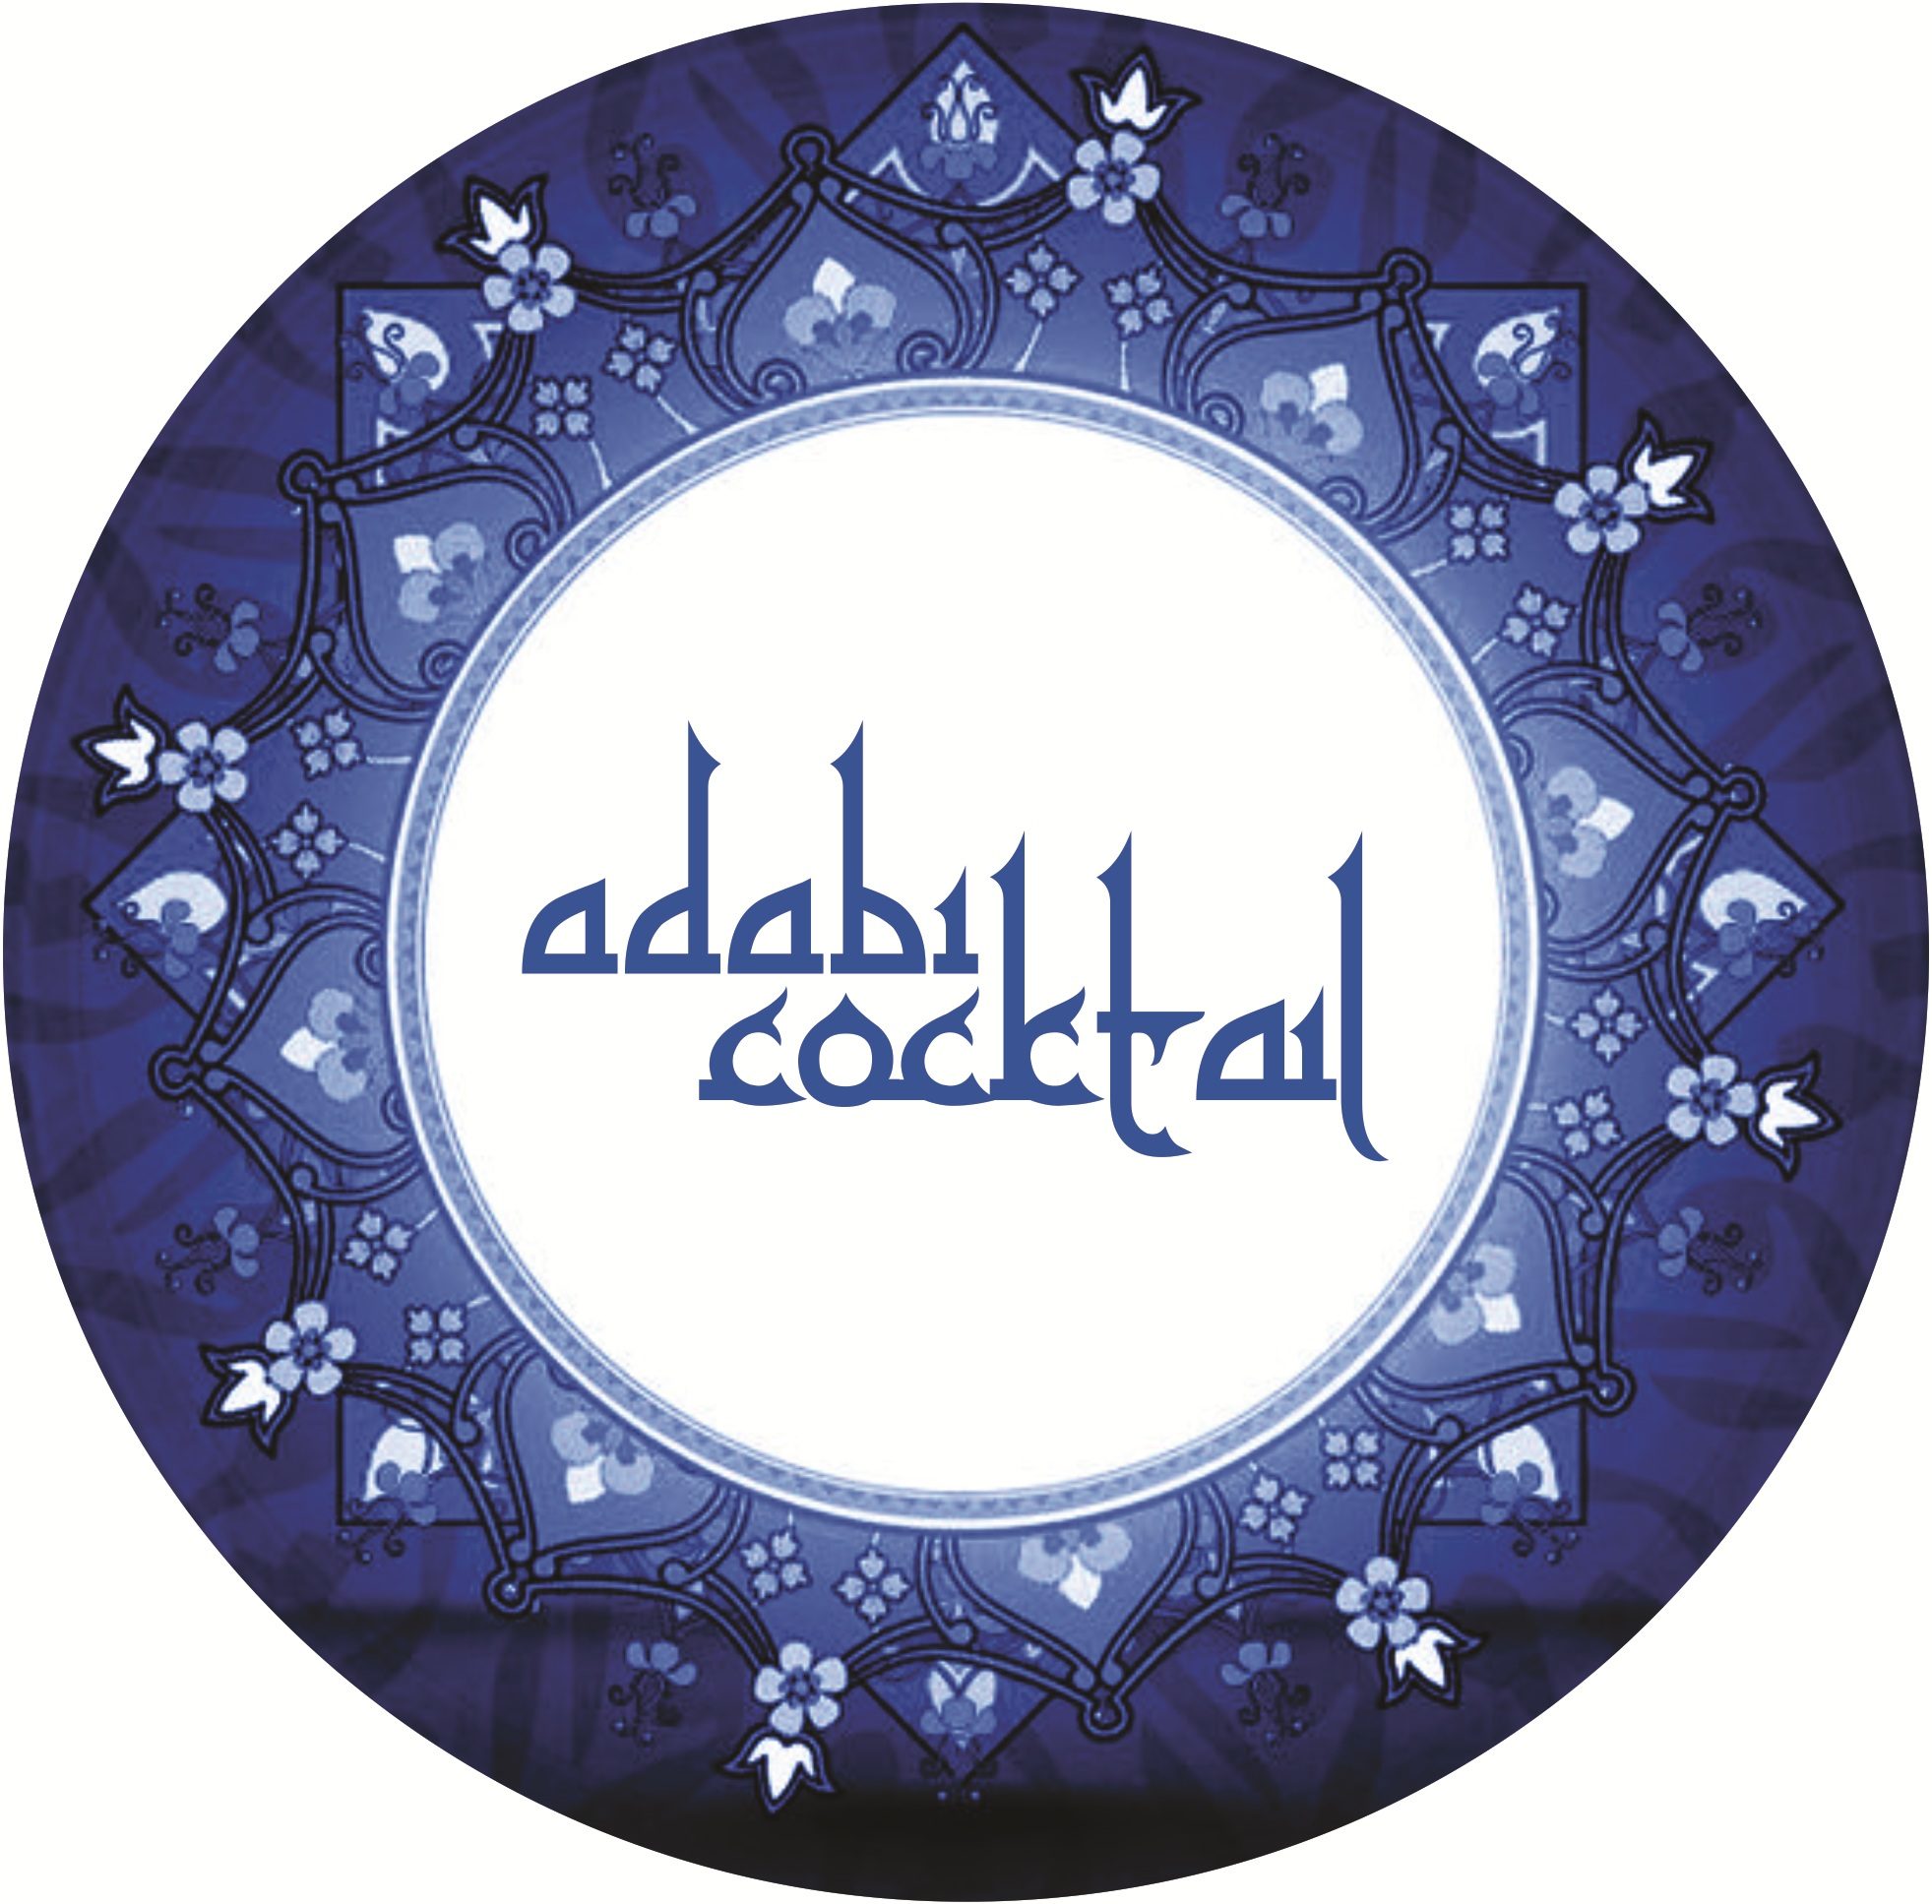 http://adabicocktail.com/wp-content/uploads/2017/02/cropped-adbi-cocktel-Copy.jpg